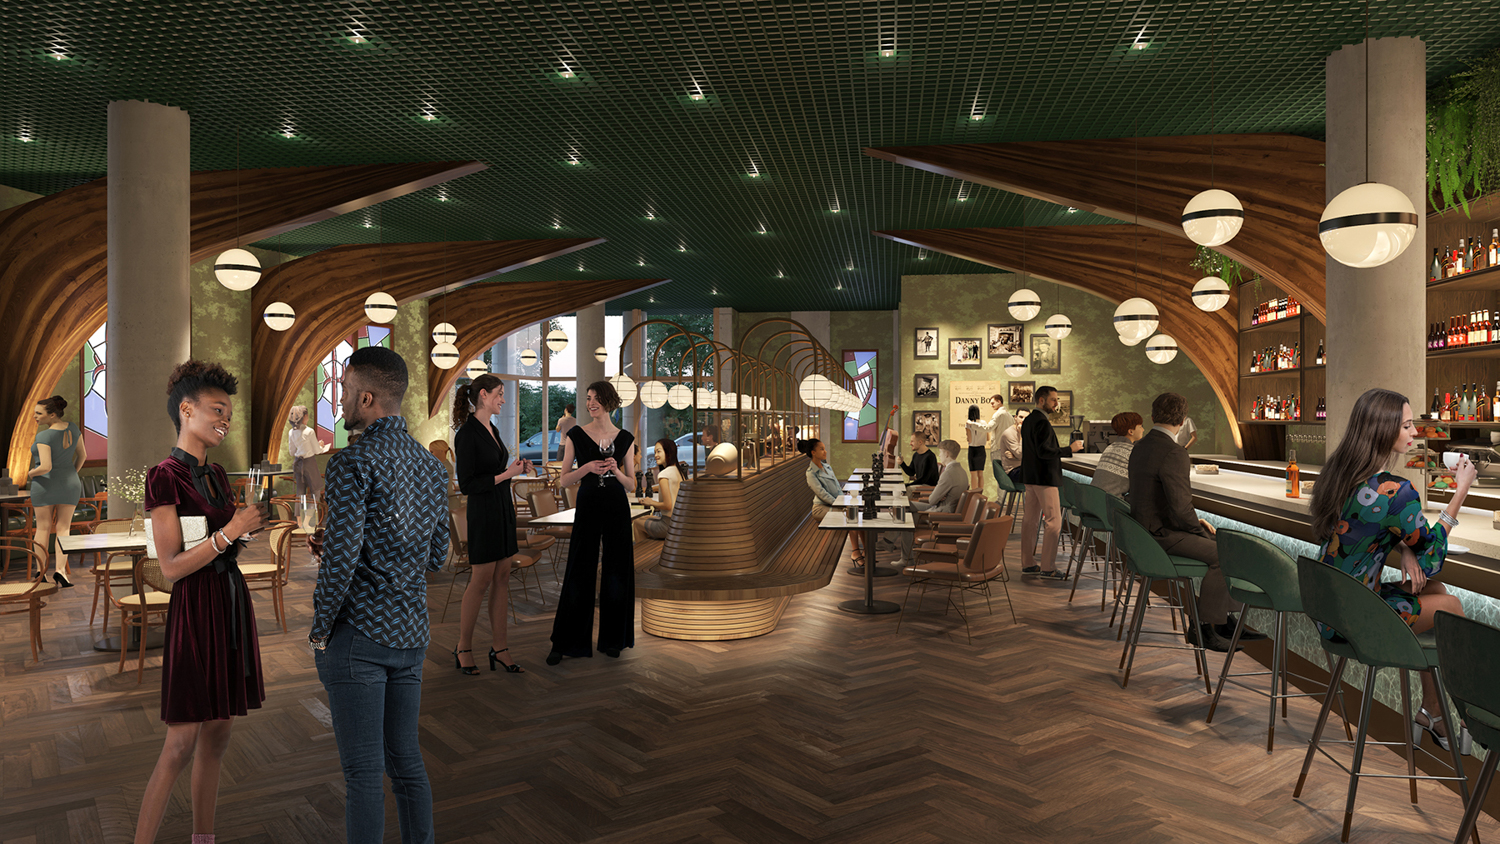 United Irish Cultural Center Emerald restaurant concept, design by Studio BANAA